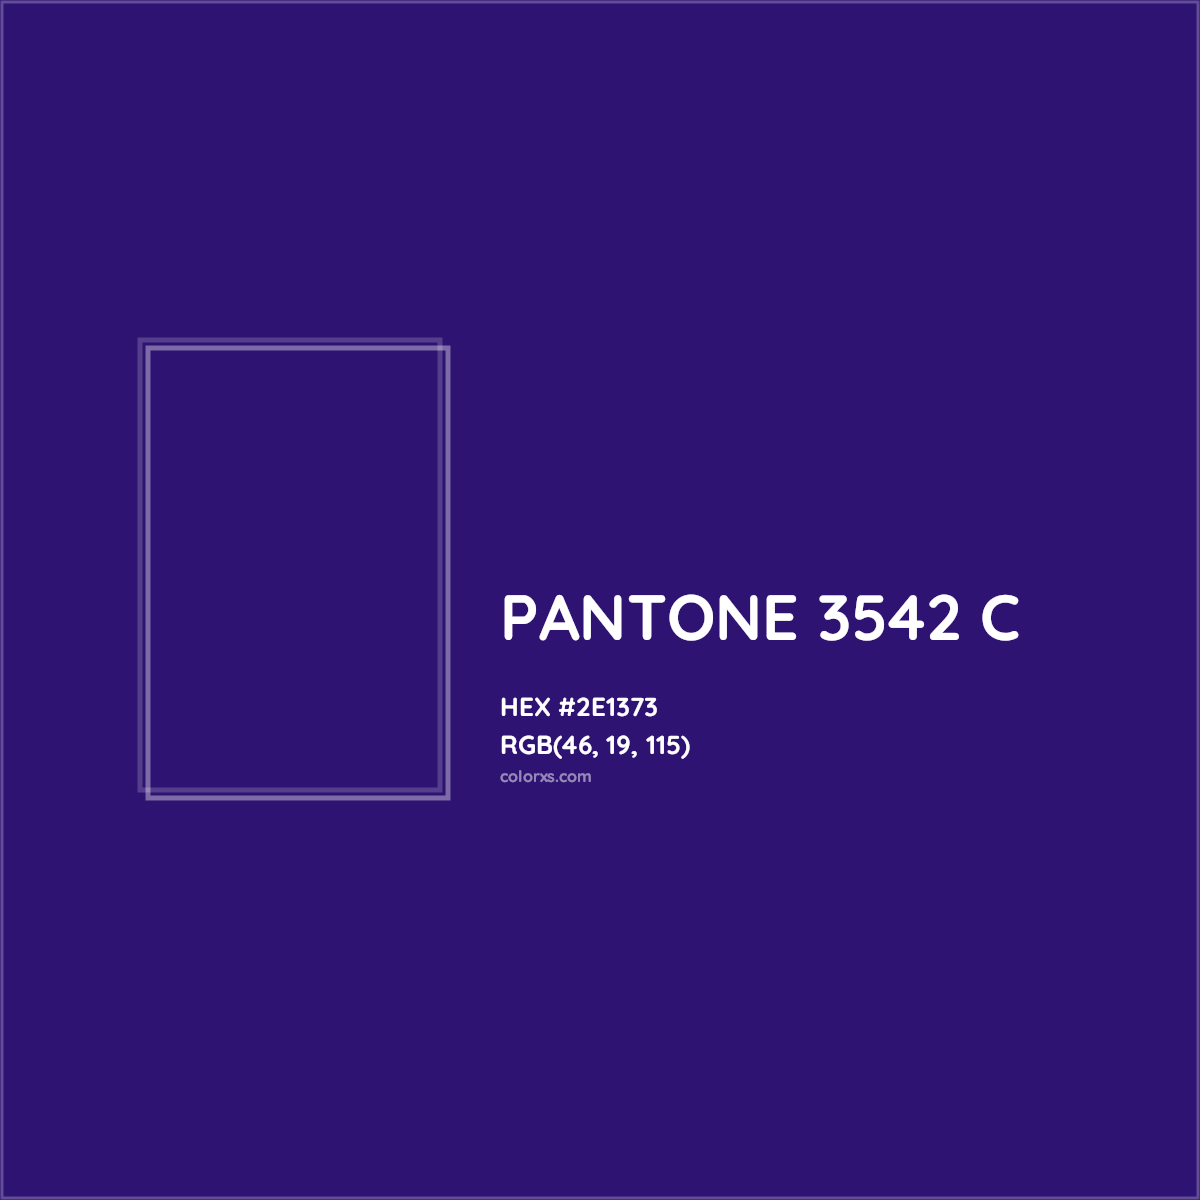 HEX #2E1373 PANTONE 3542 C CMS Pantone PMS - Color Code